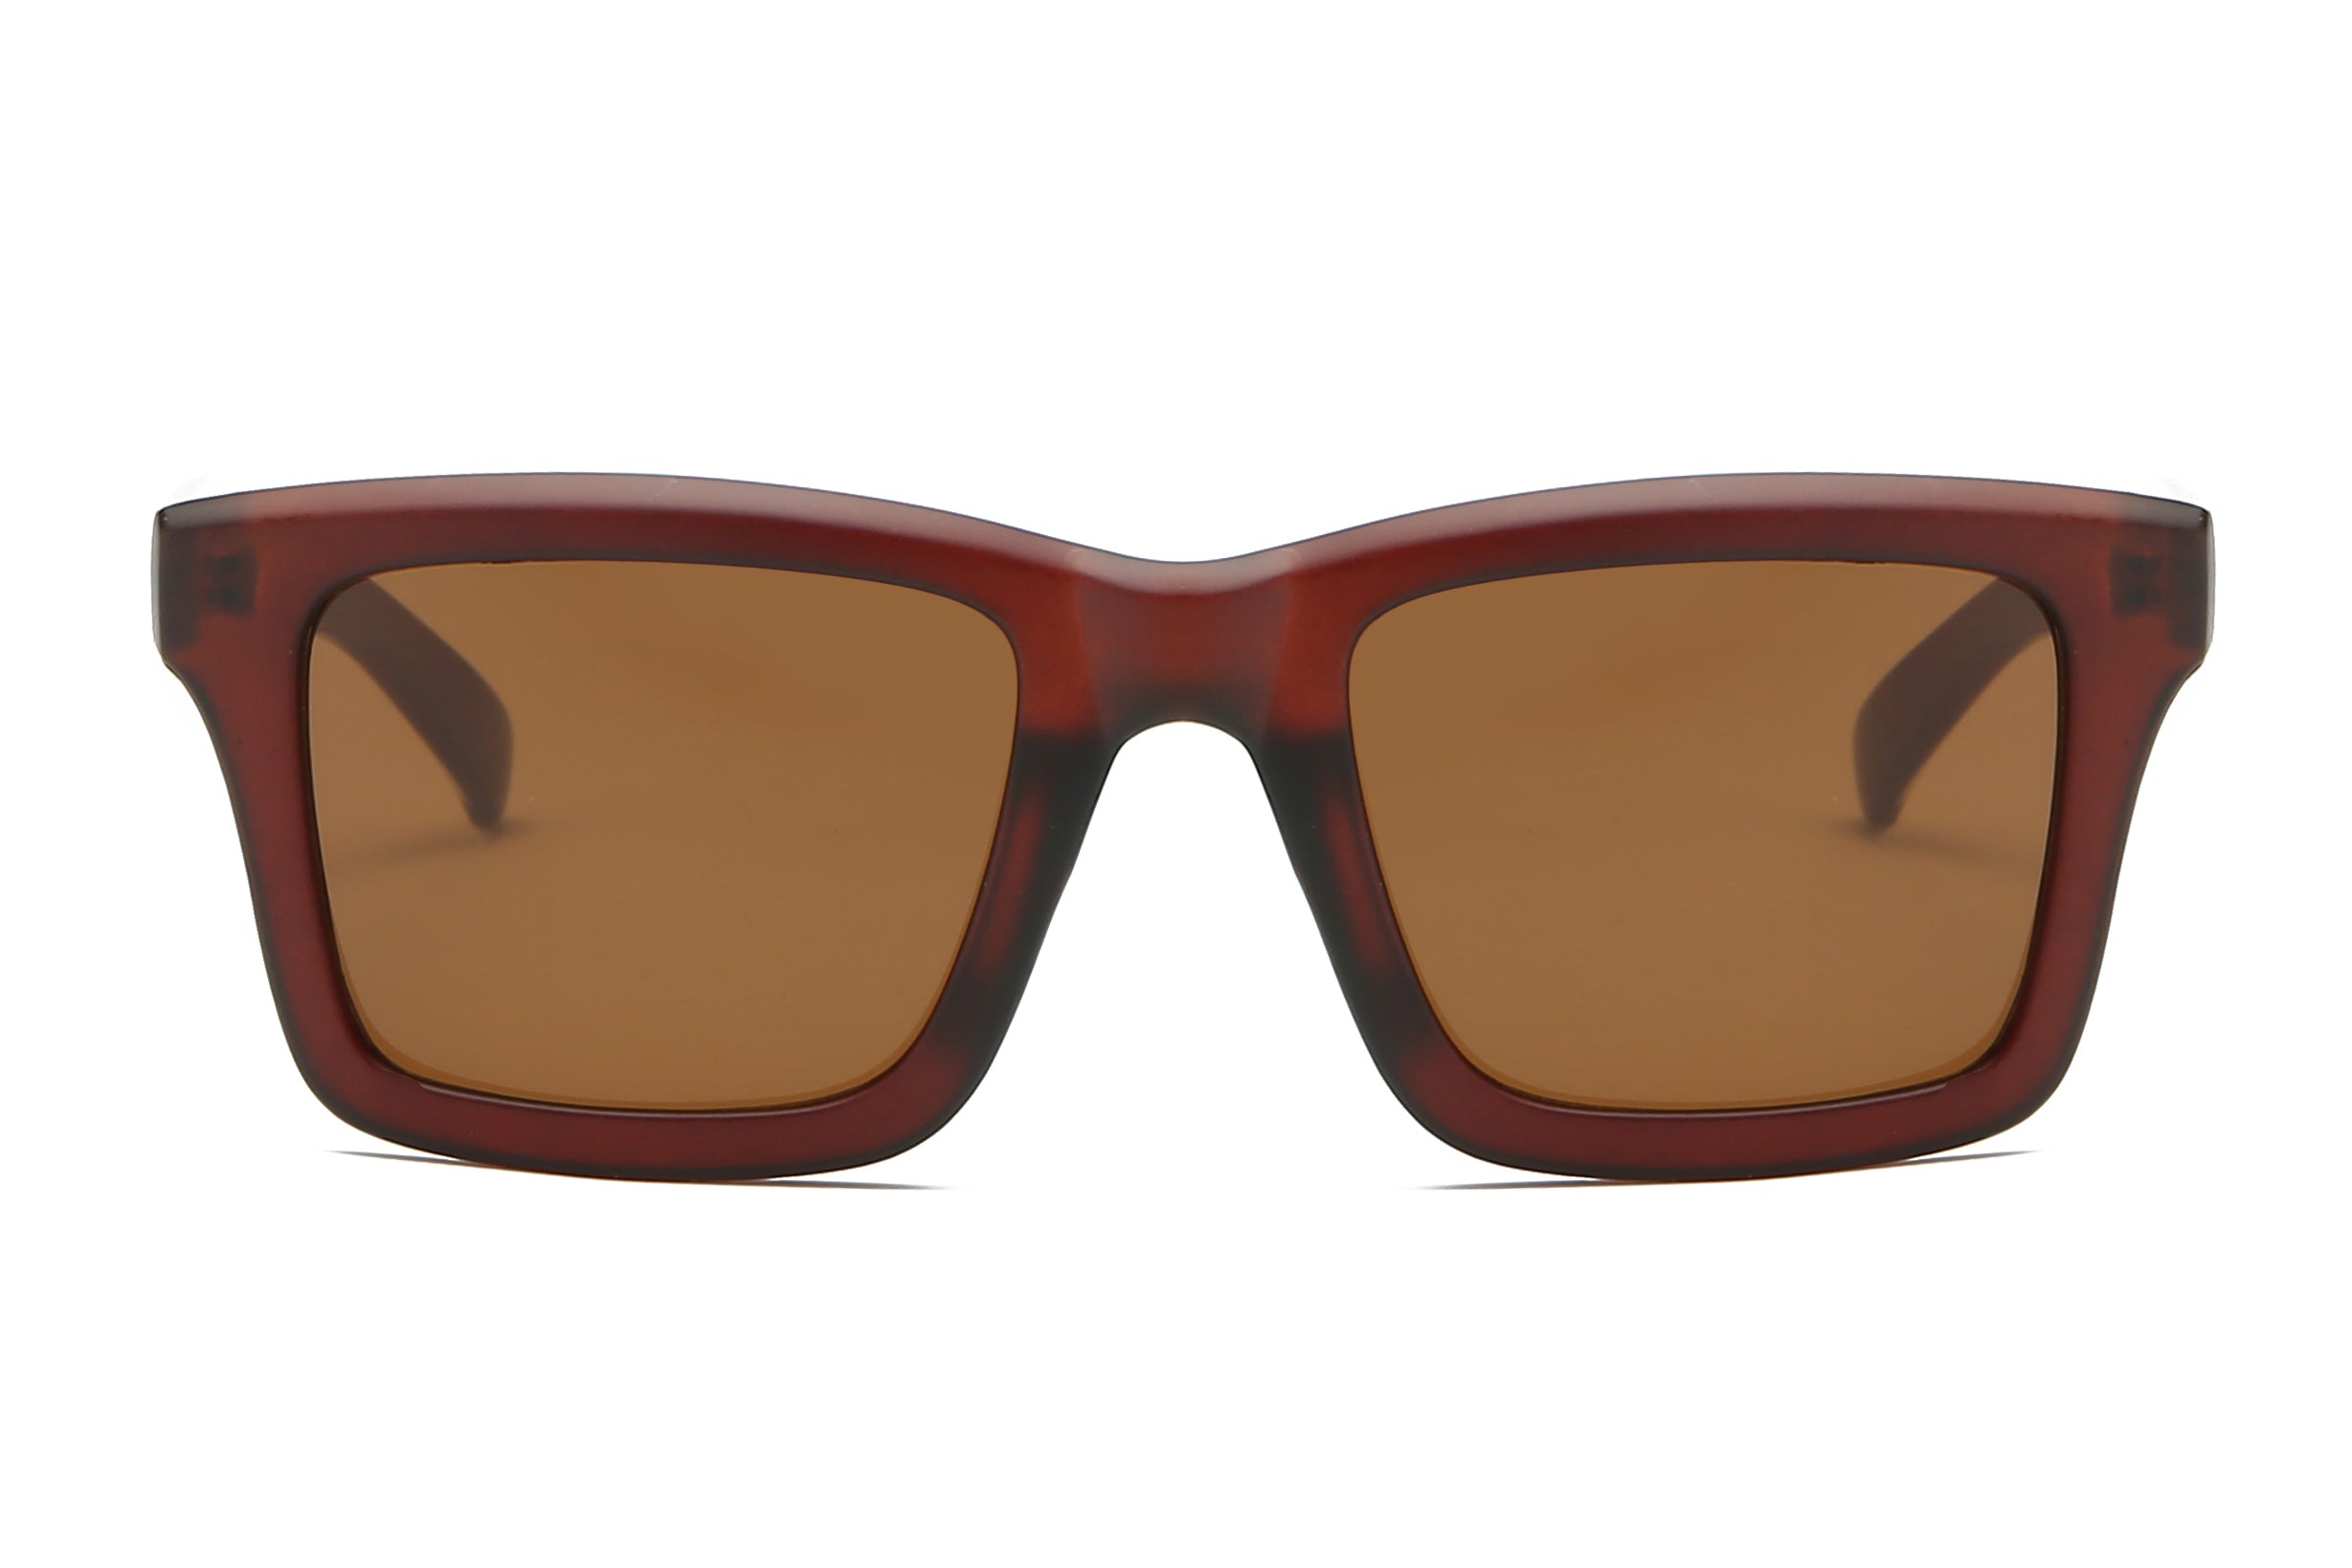 S1058 - Classic Square Retro VINTAGE Sunglasses Assorted/Mixed